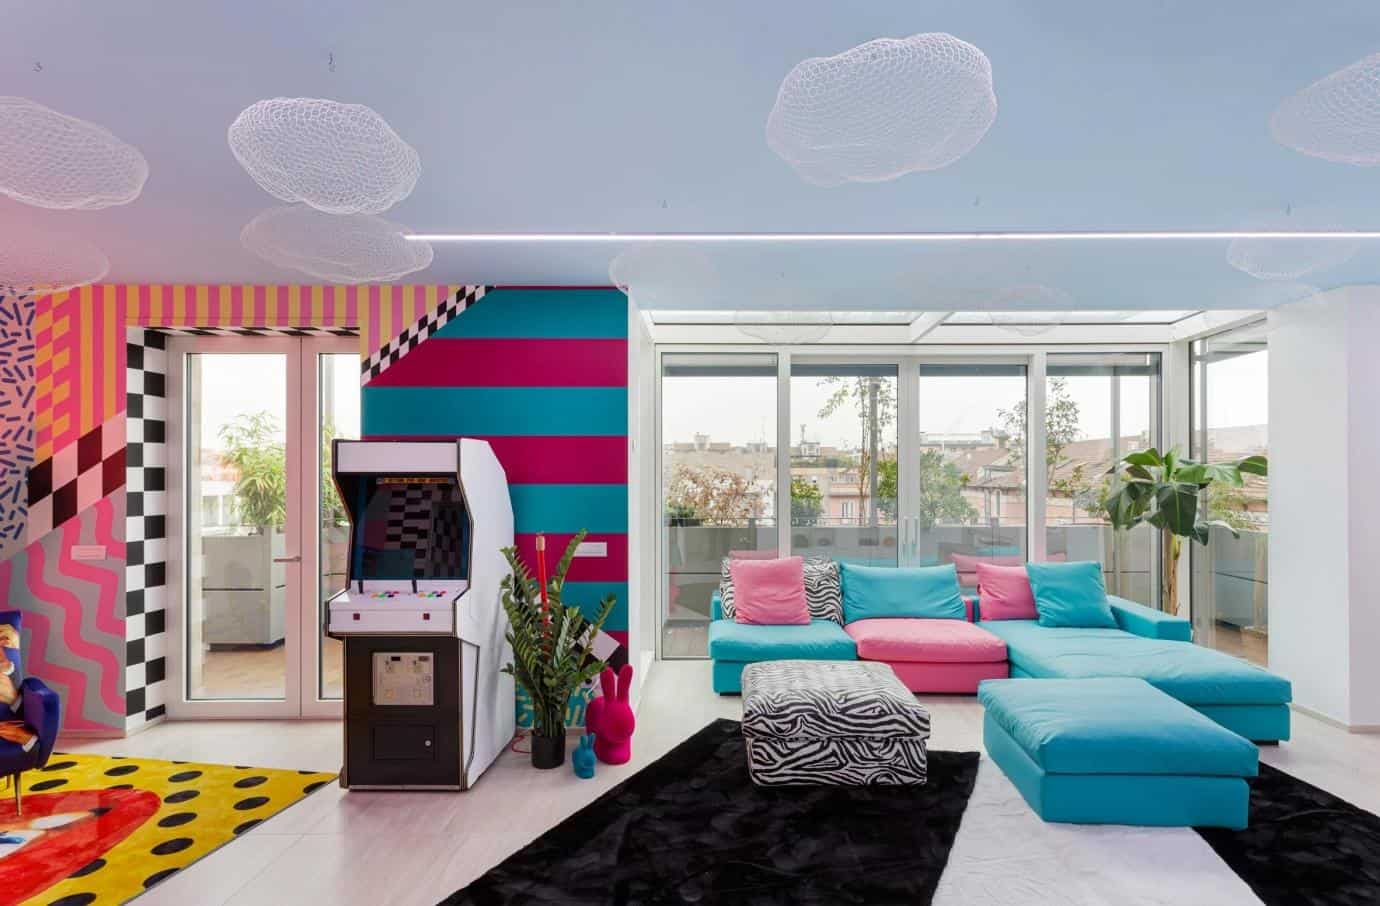 how to become a home decor influencer - beautifully decorated interior design